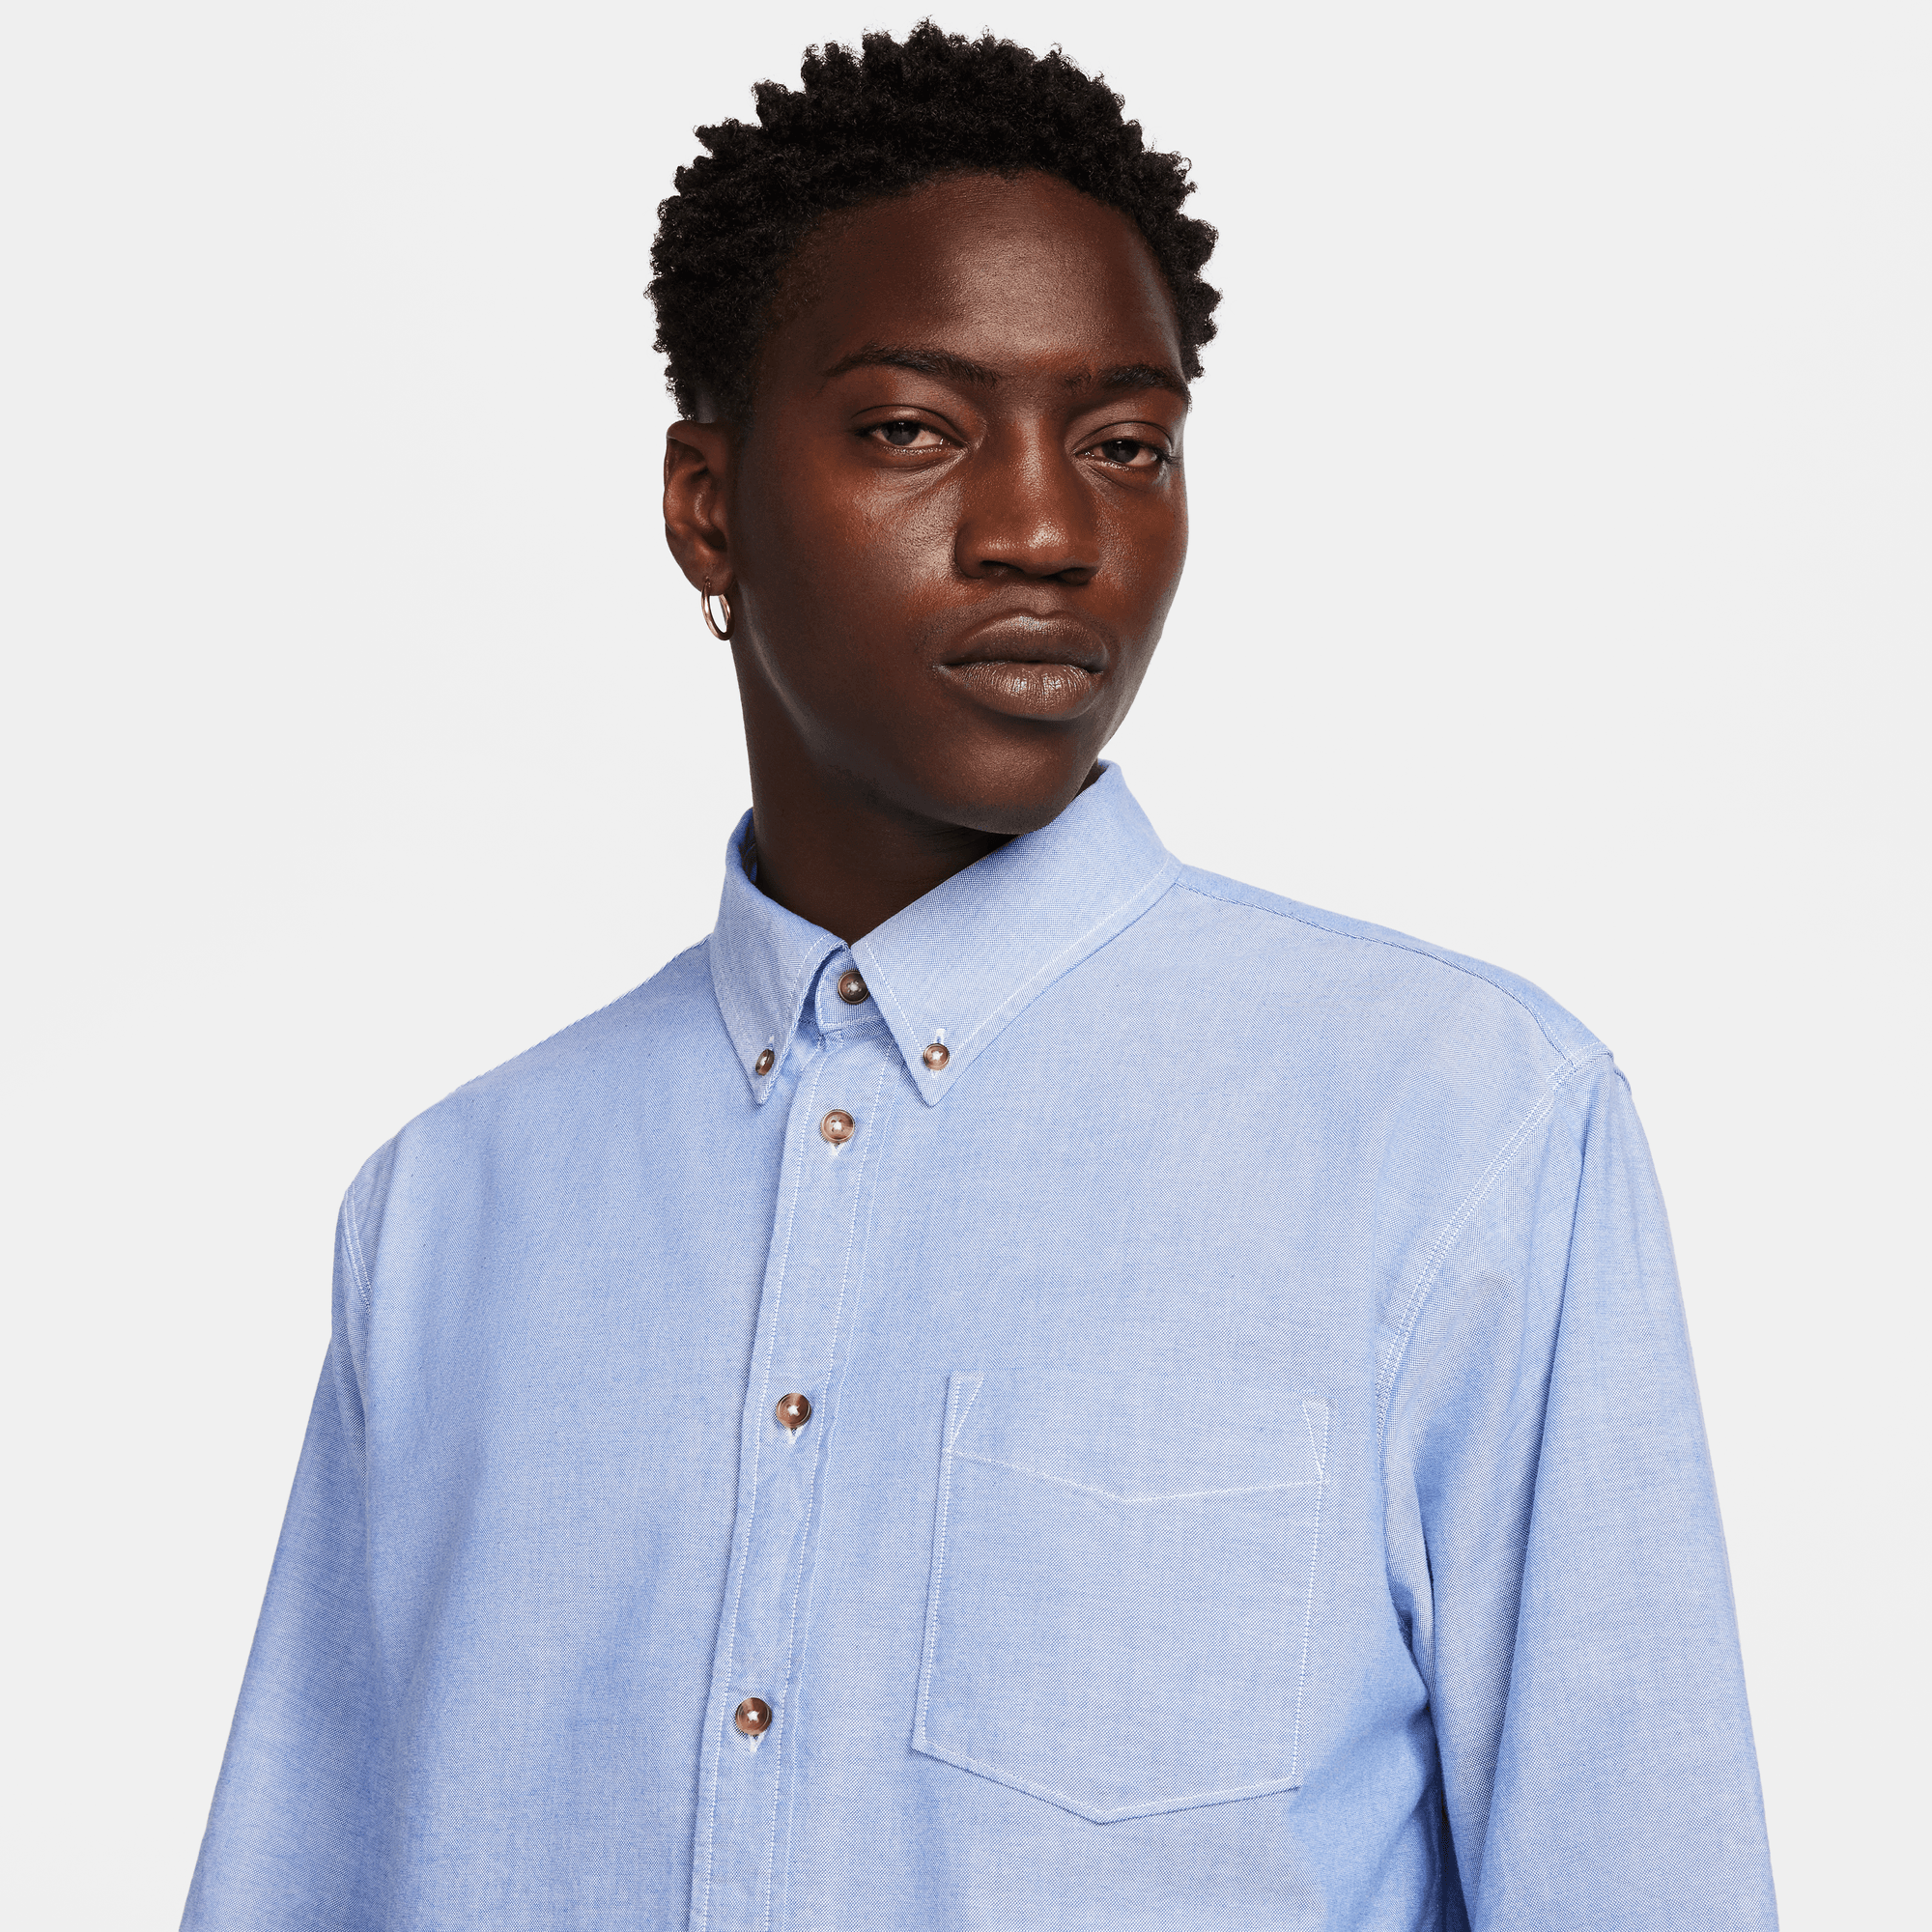 Nike Life Blue Long-Sleeve Oxford Button-Down Shirt